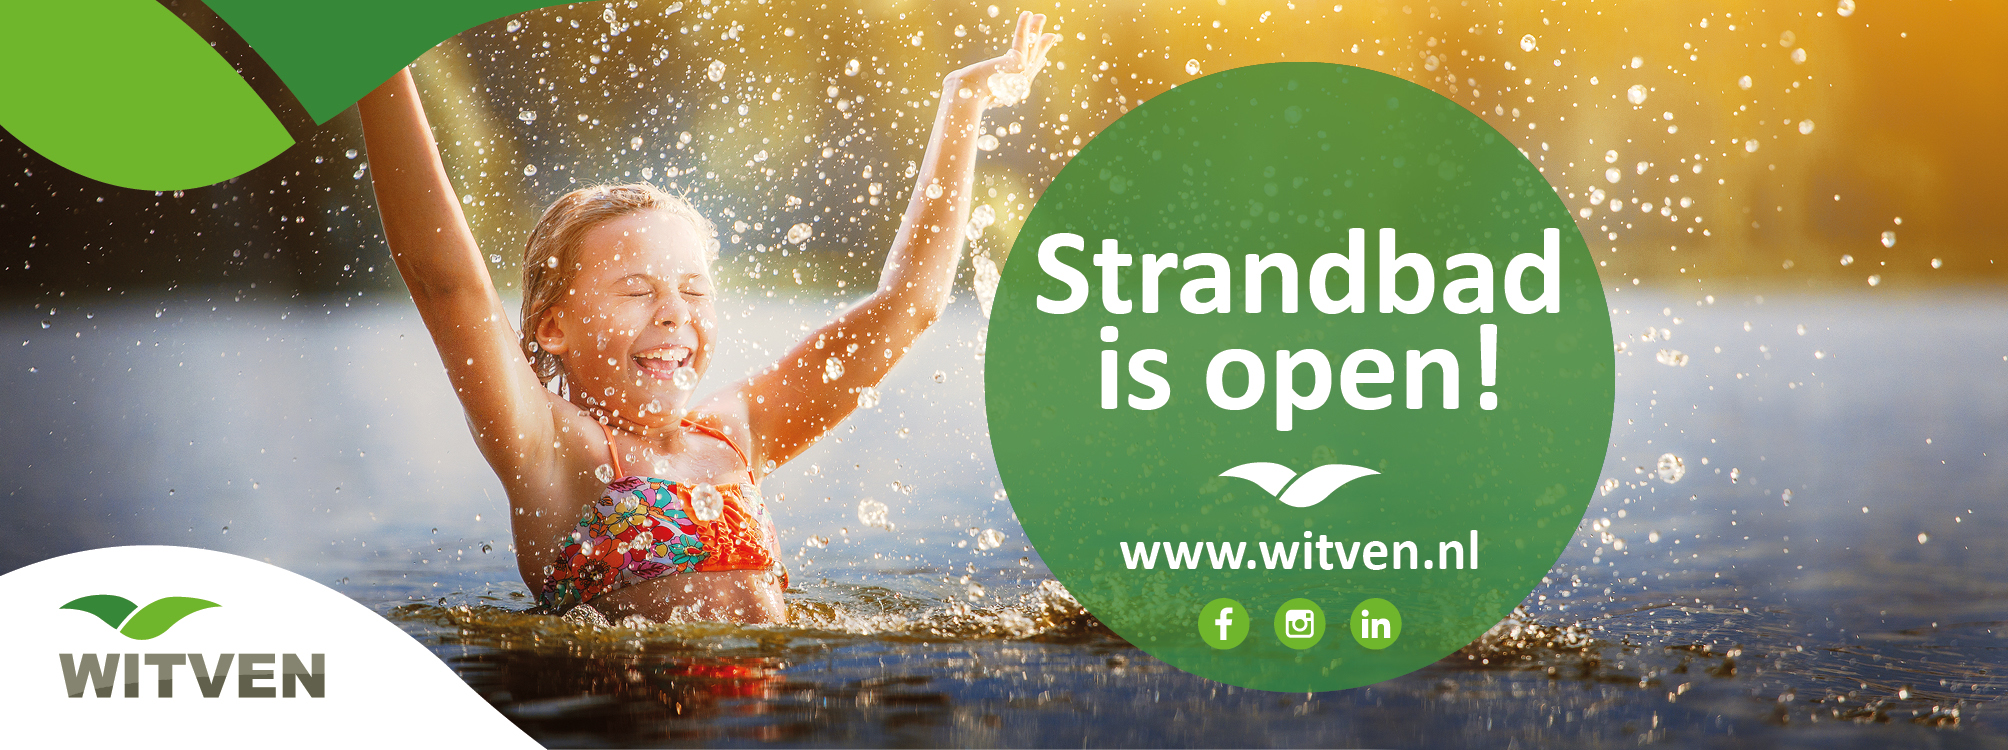 Witven_Veldhoven_strandbad is open